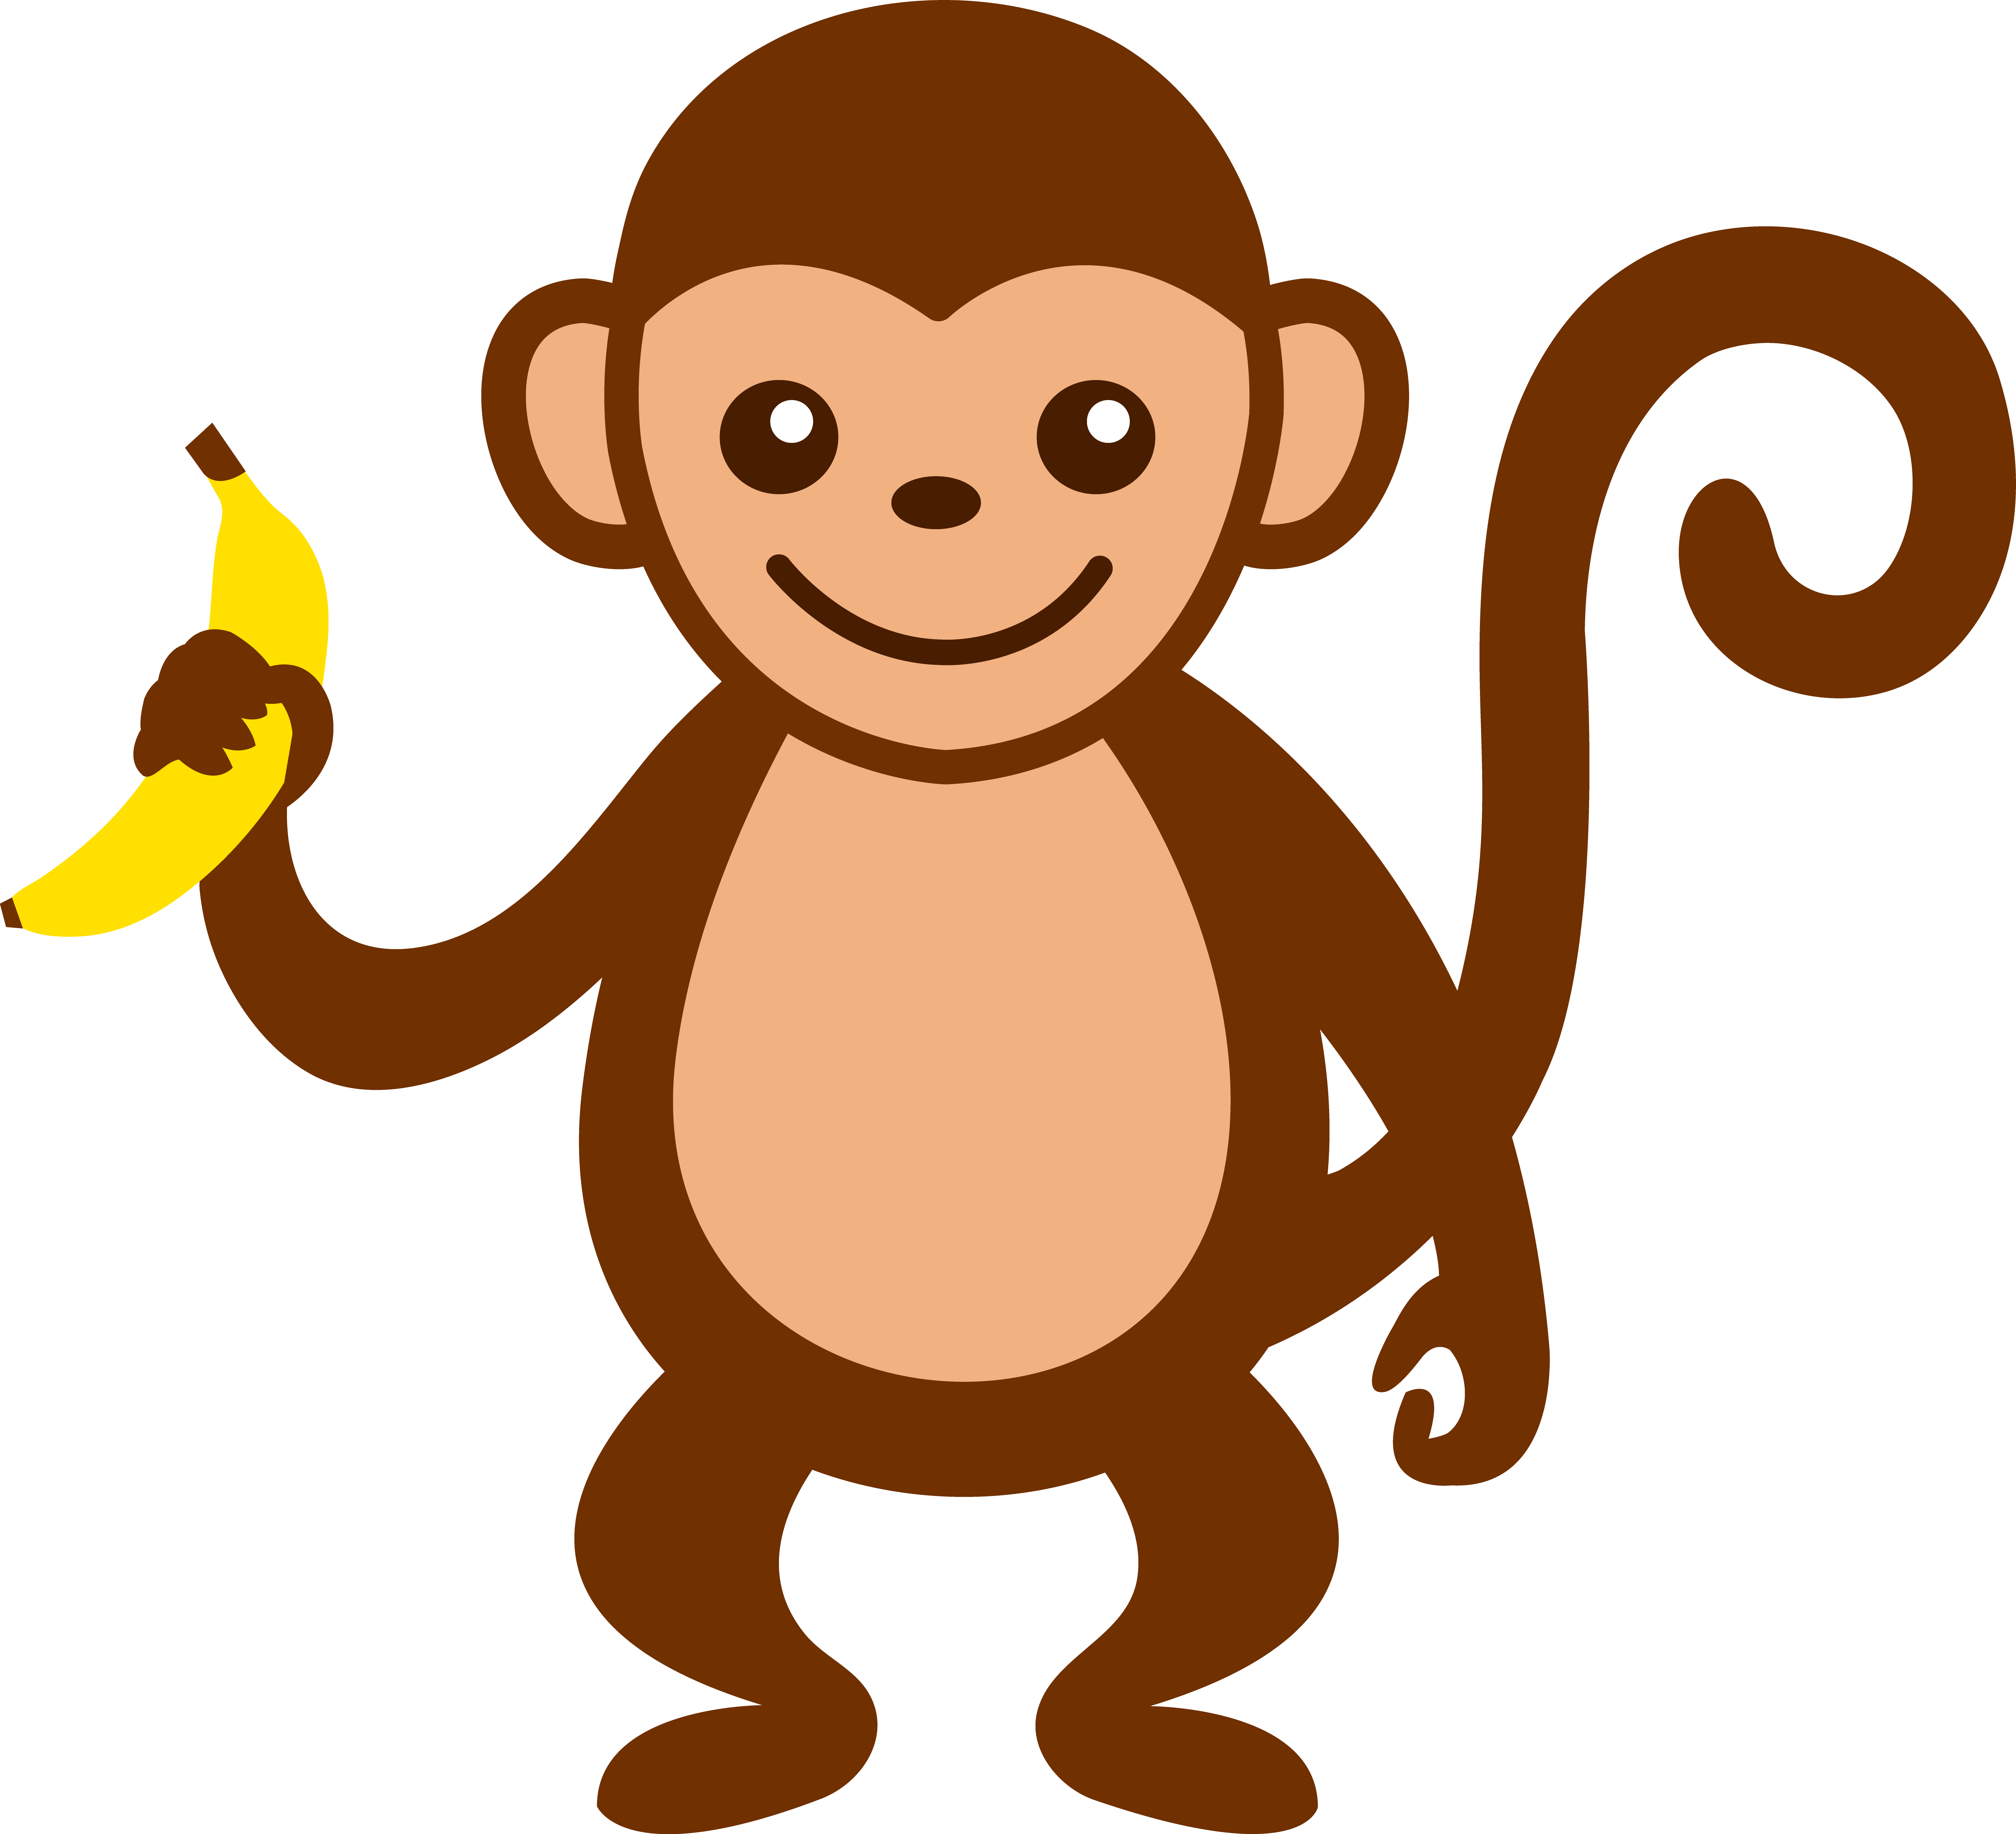 Pictures Of Cartoon Monkeys - Widescreen HD Wallpapers